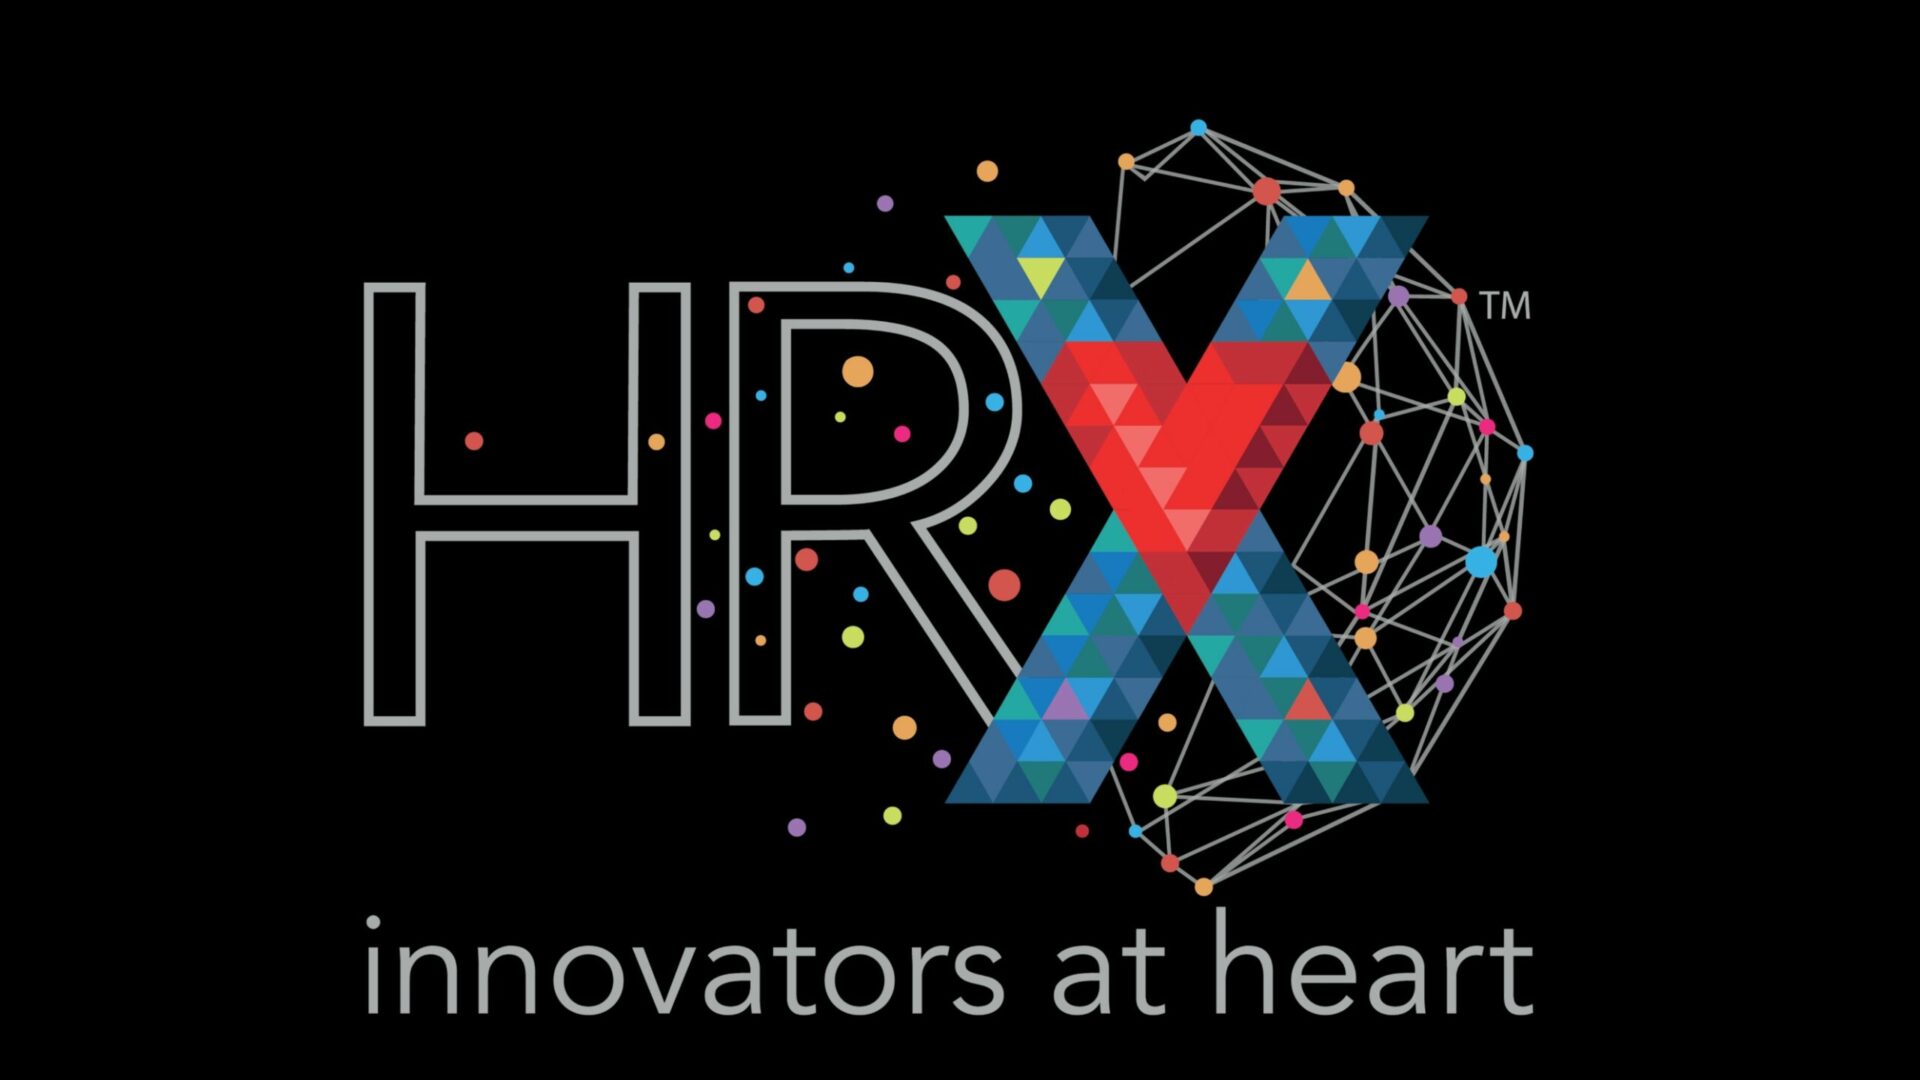 Heart Rhythm Society HRX Conference The Expo Group